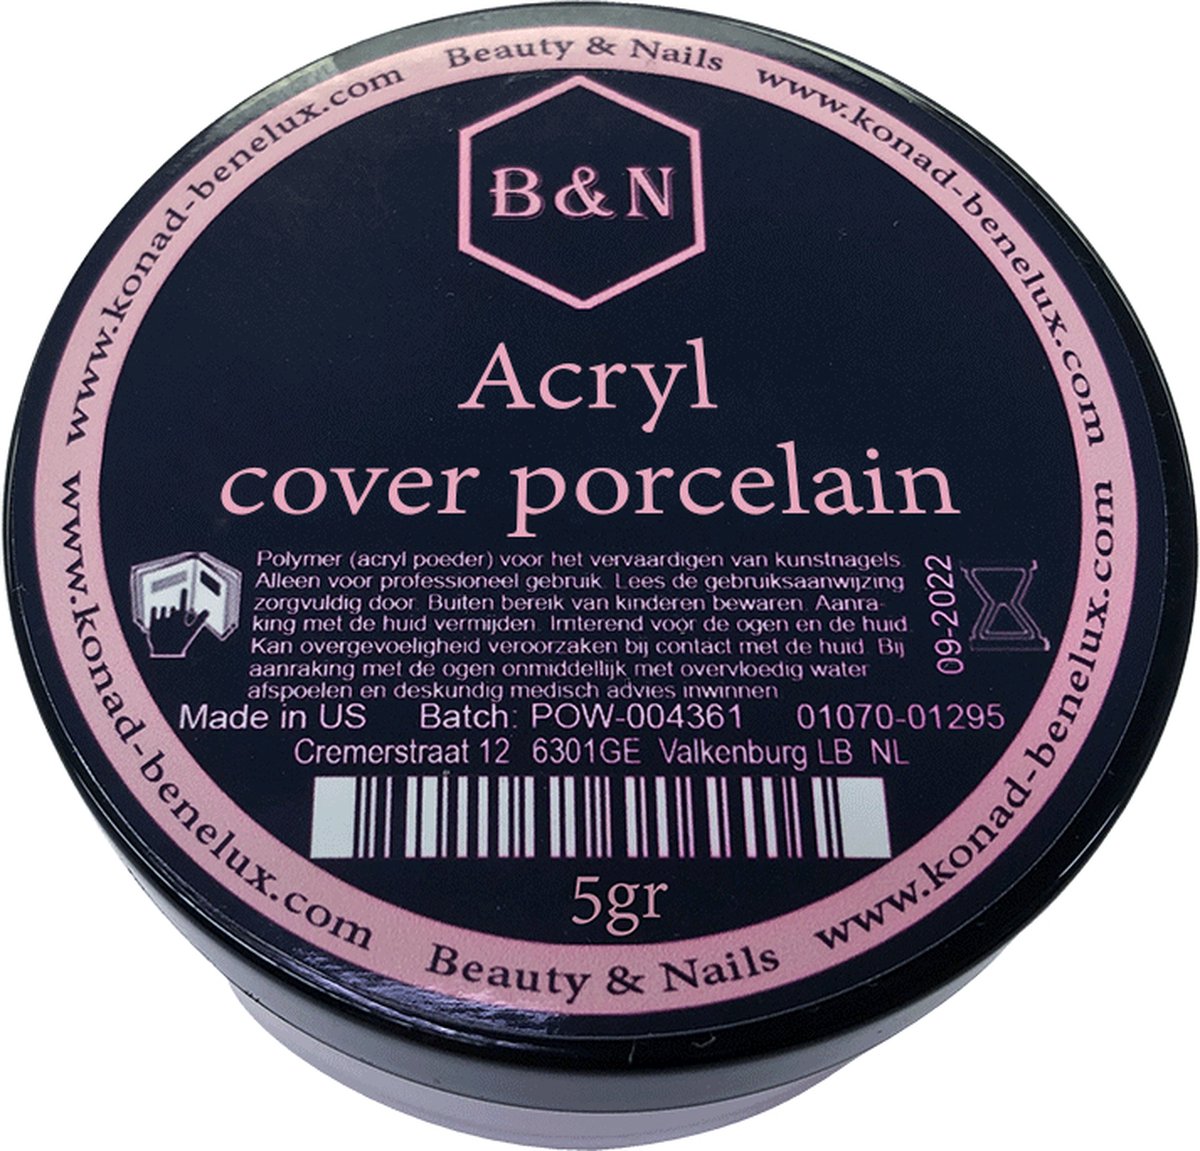 Acryl - cover porcelain - 5 gr | B&N - acrylpoeder - VEGAN - acrylpoeder